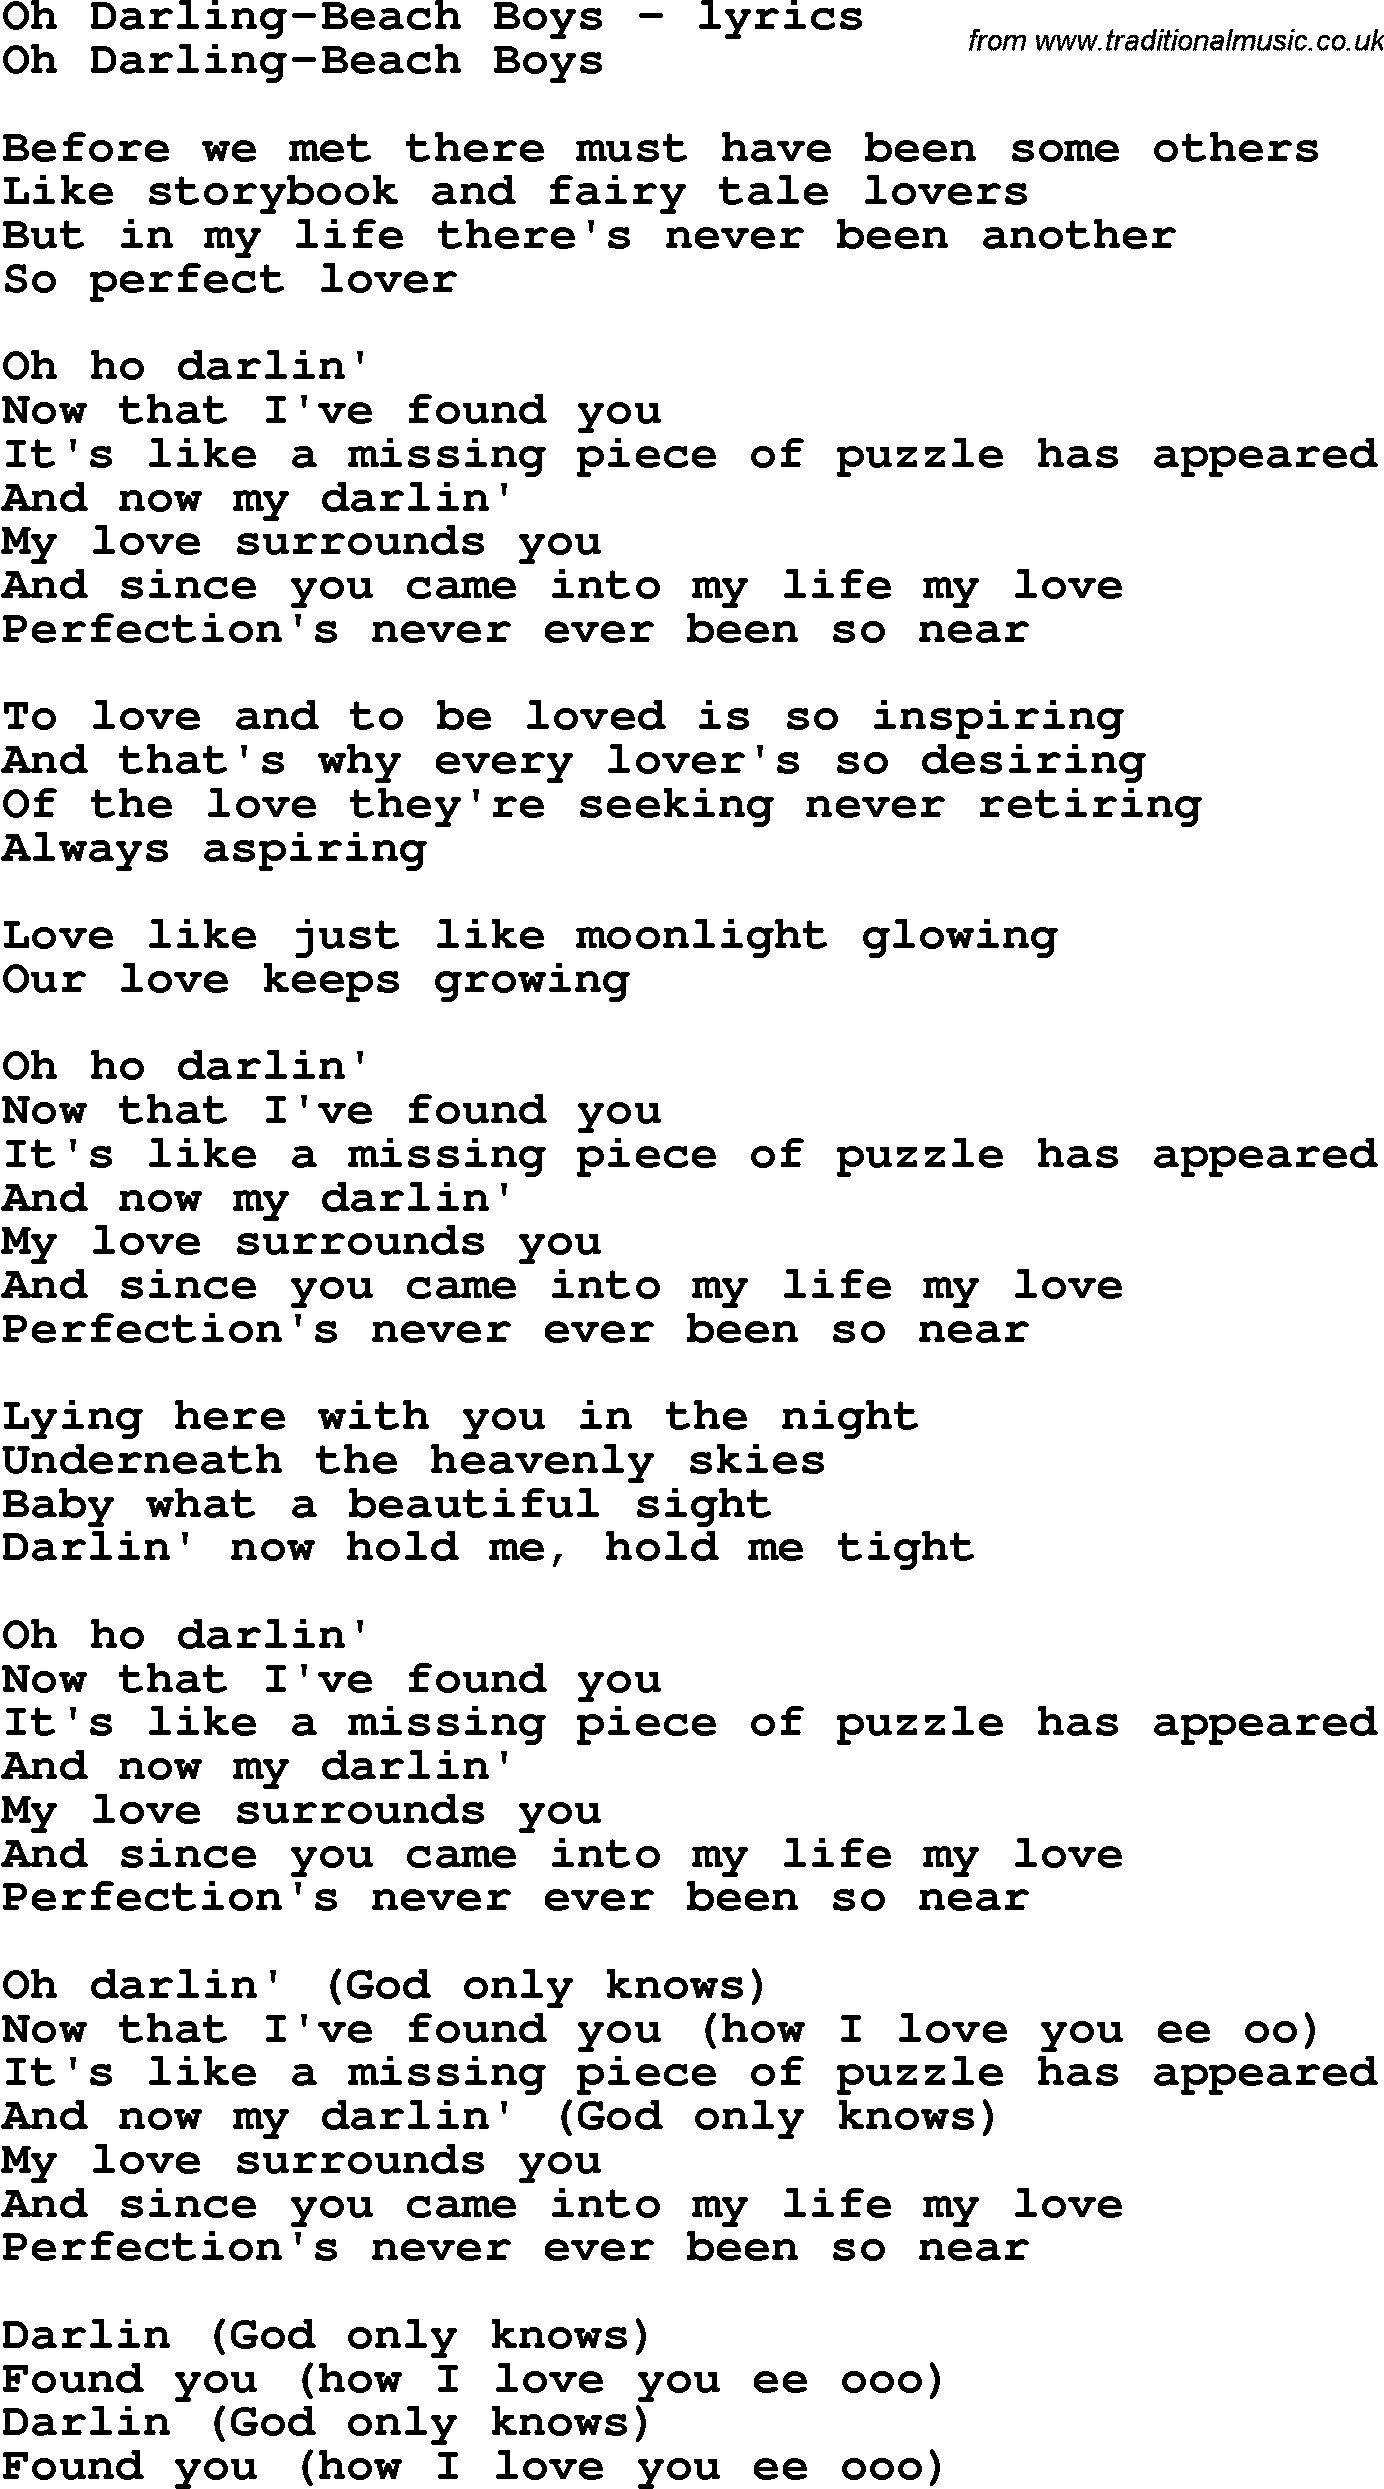 Love Song Lyrics For Oh Darling Beach Boys